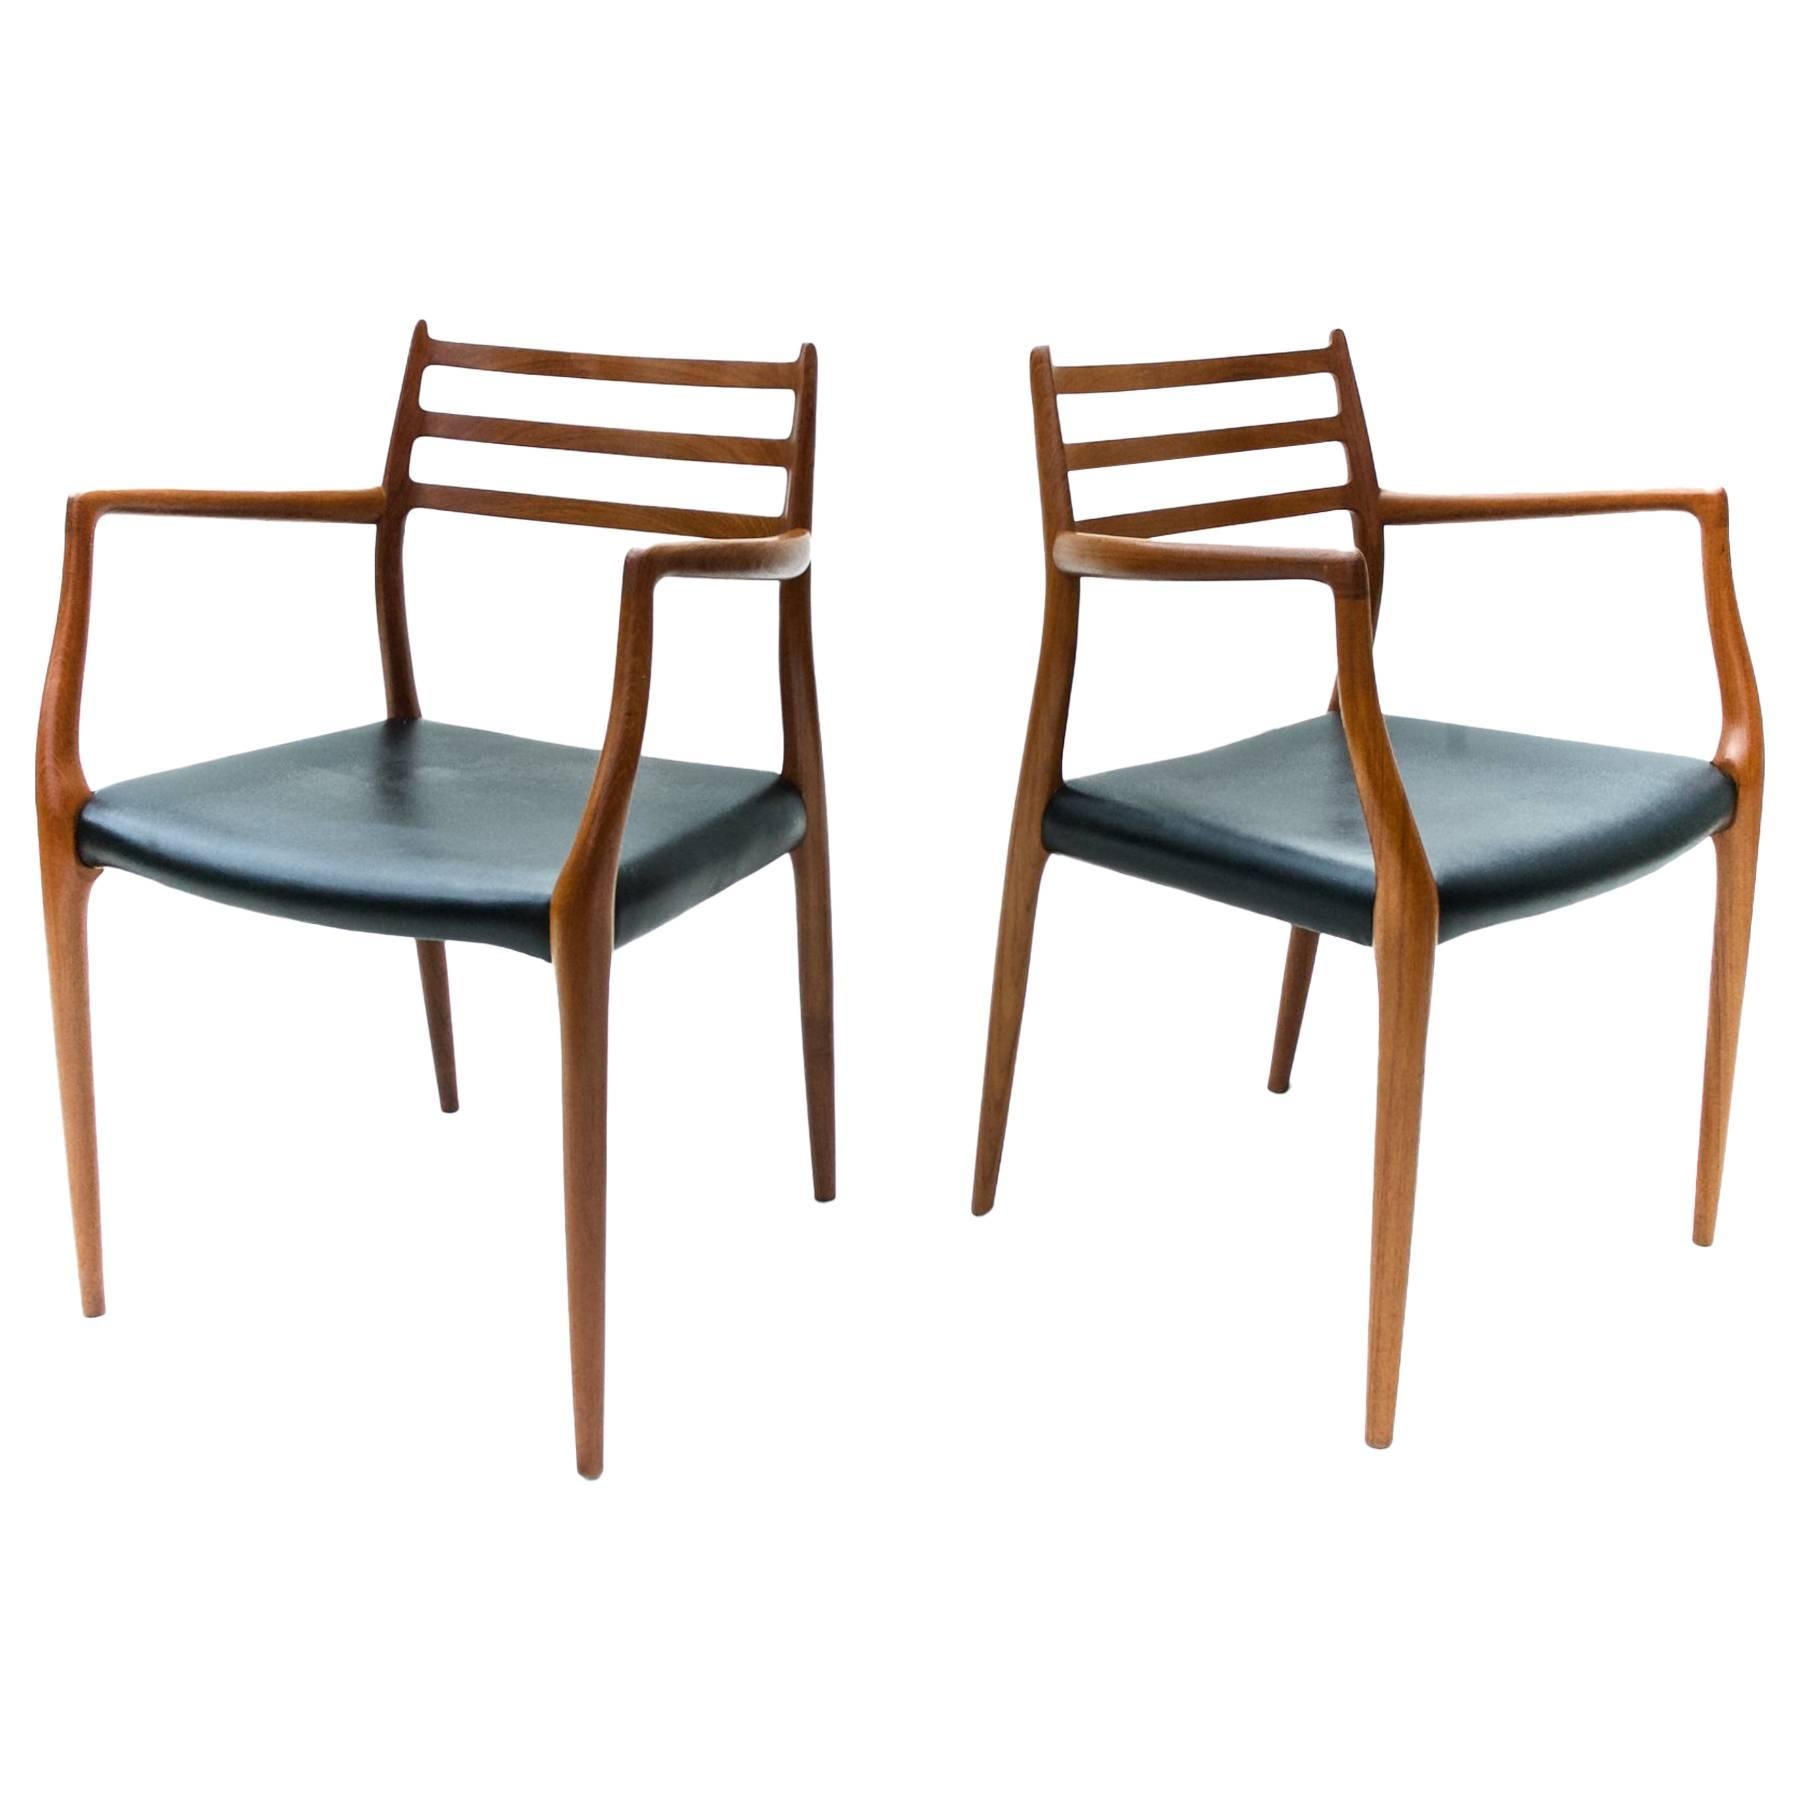 N.O. Moller Model 62 Danish Modern Dining Chairs of Teak, Pair